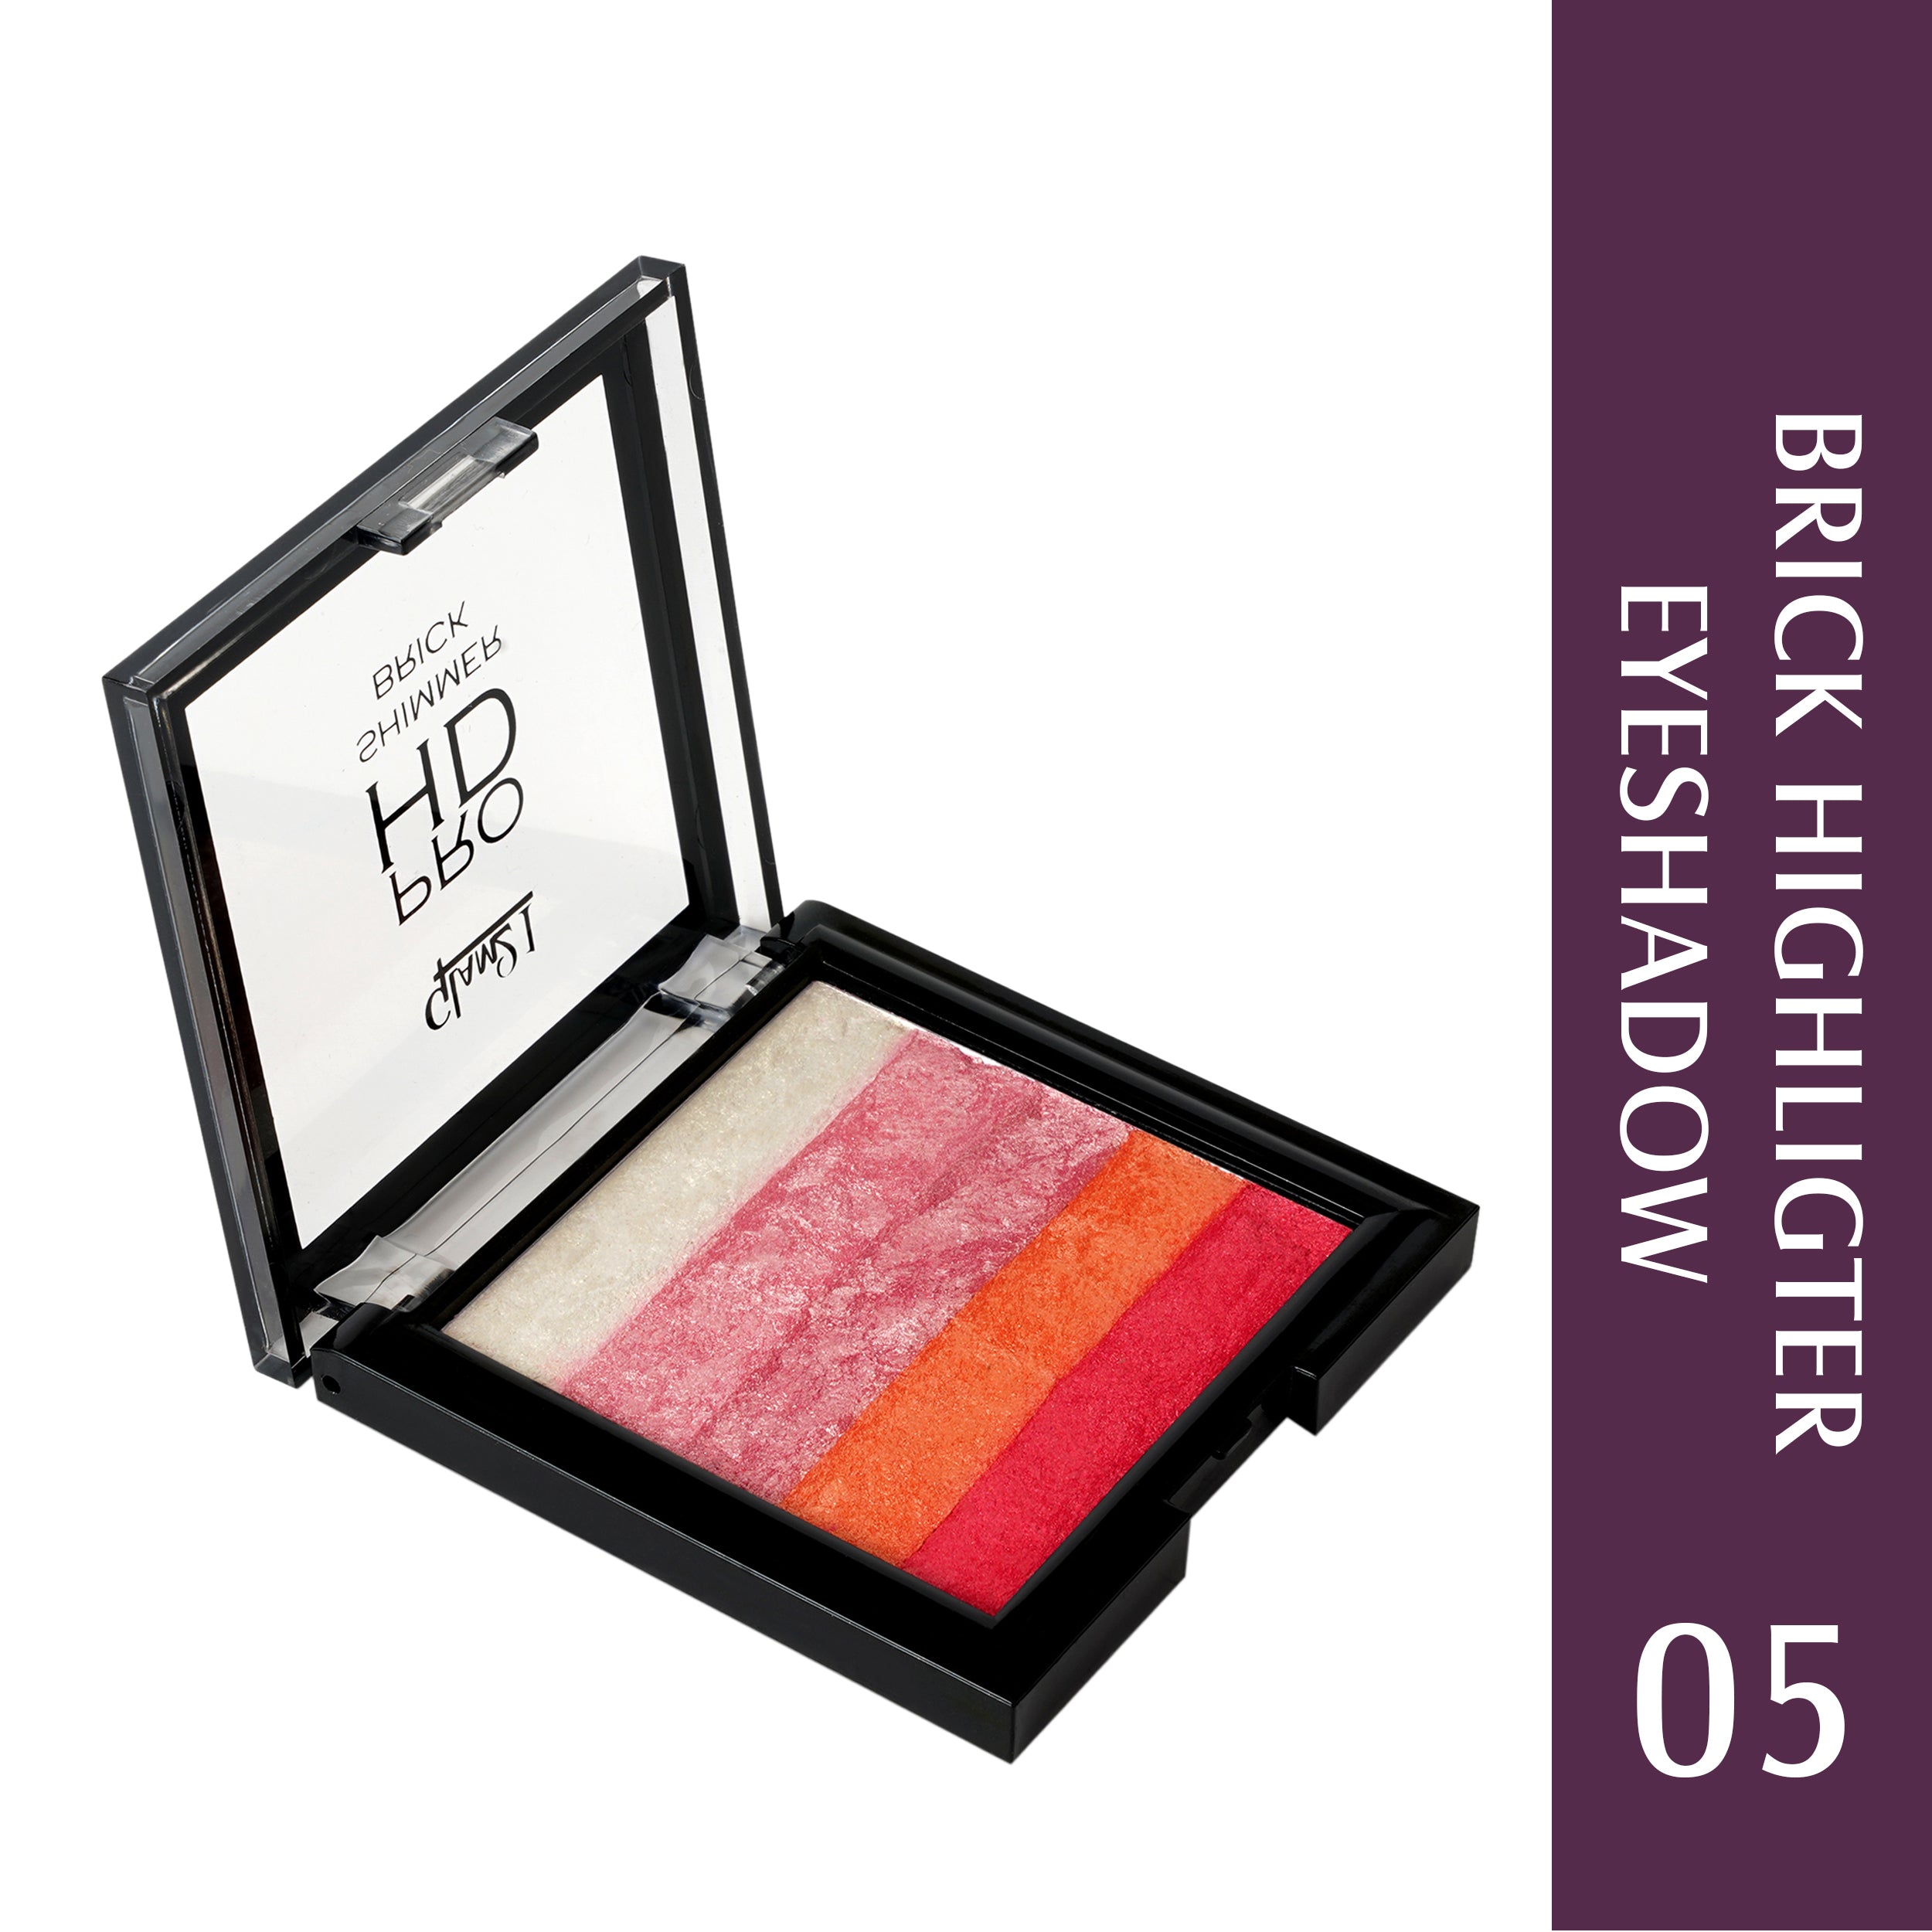 Glam21 Brick Eyeshadow Palette Long-Lasting| Shimmery Finish 5 Highly Pigmented Shades 7.5 g (Shade-05)